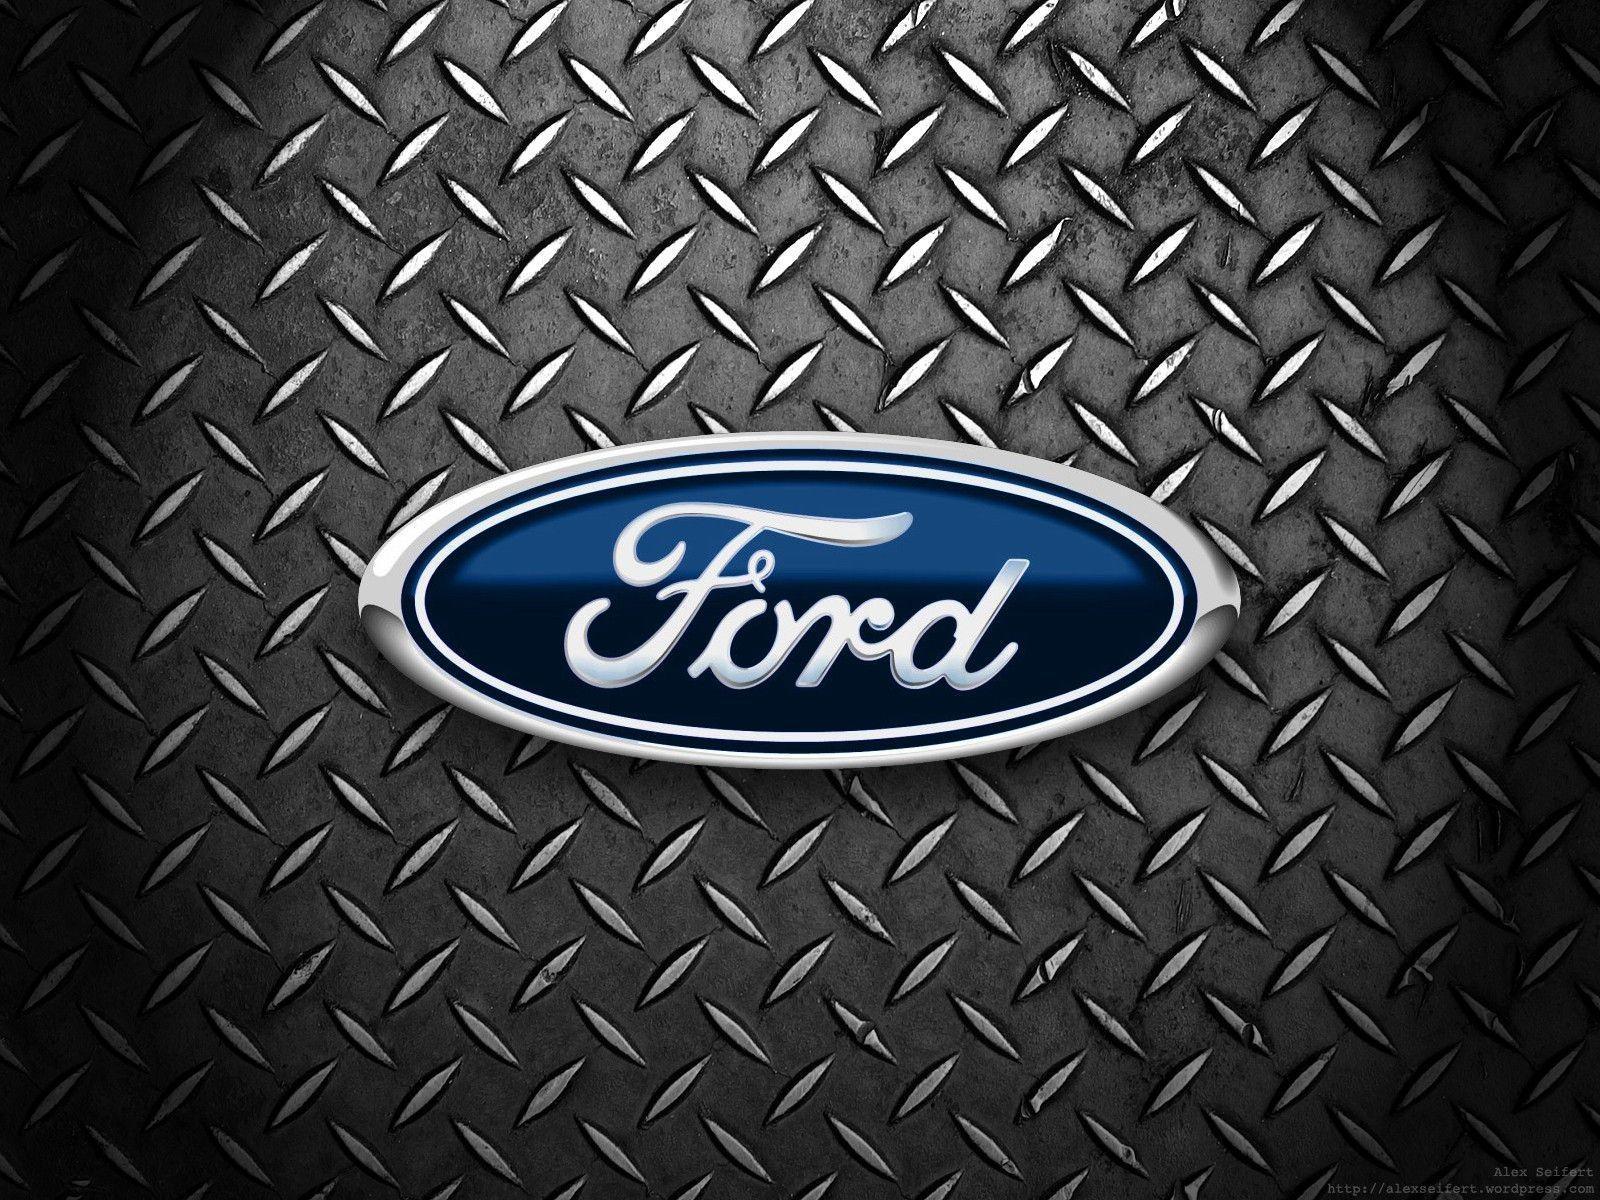 Download Ford Car Brand HD Wallpaper. Make FB Cover Photo